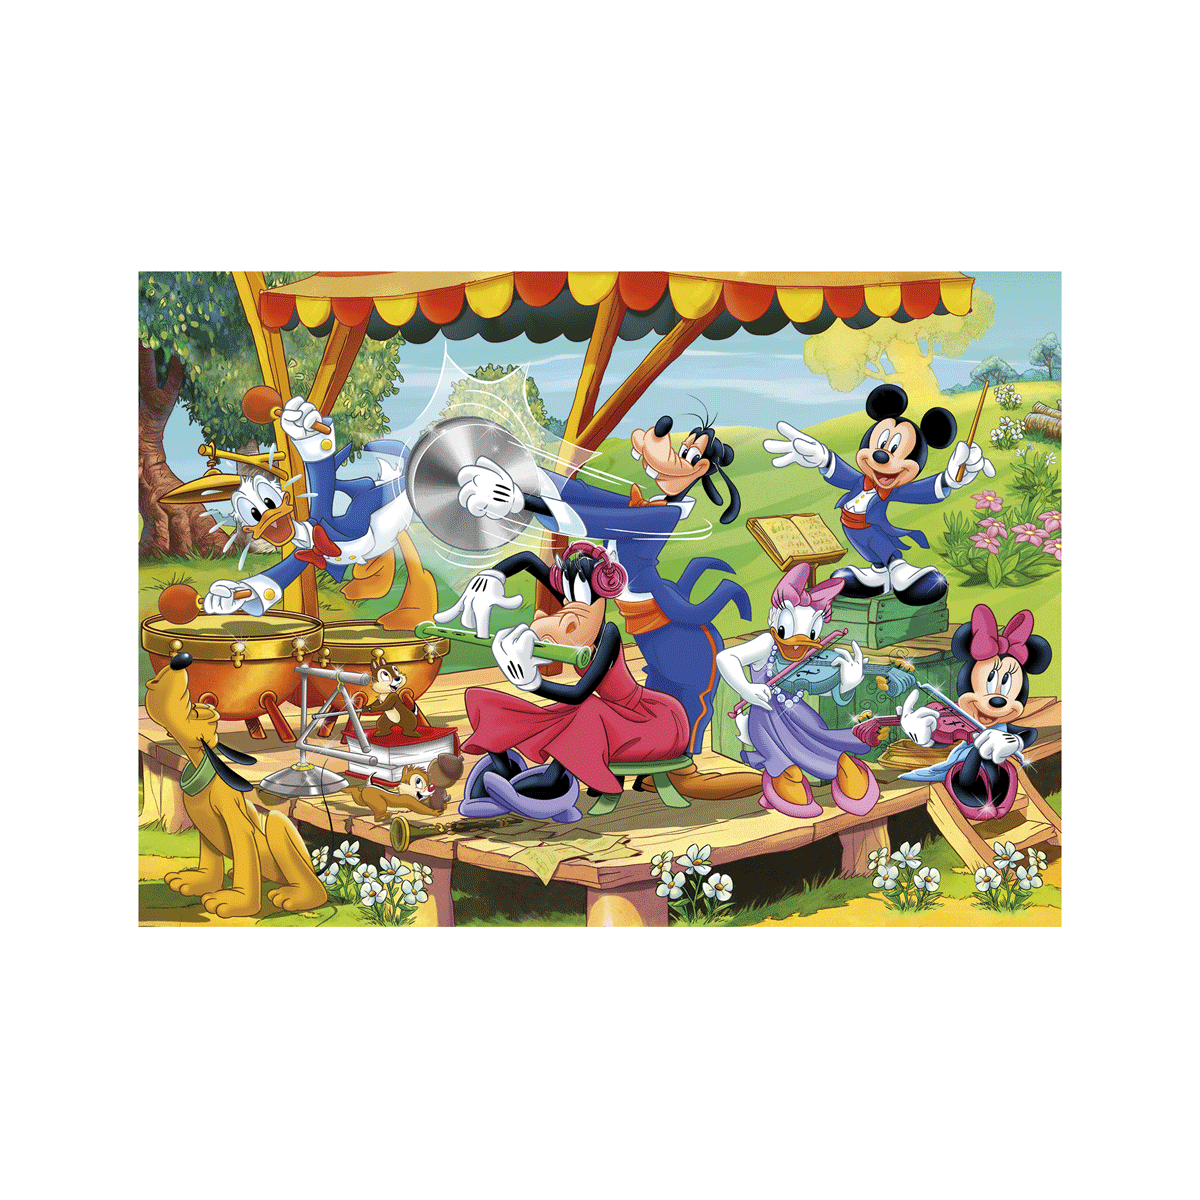 Clementoni supercolor puzzle disney mickey and friends - 2x60 pezzi, puzzle bambini 4 anni - CLEMENTONI